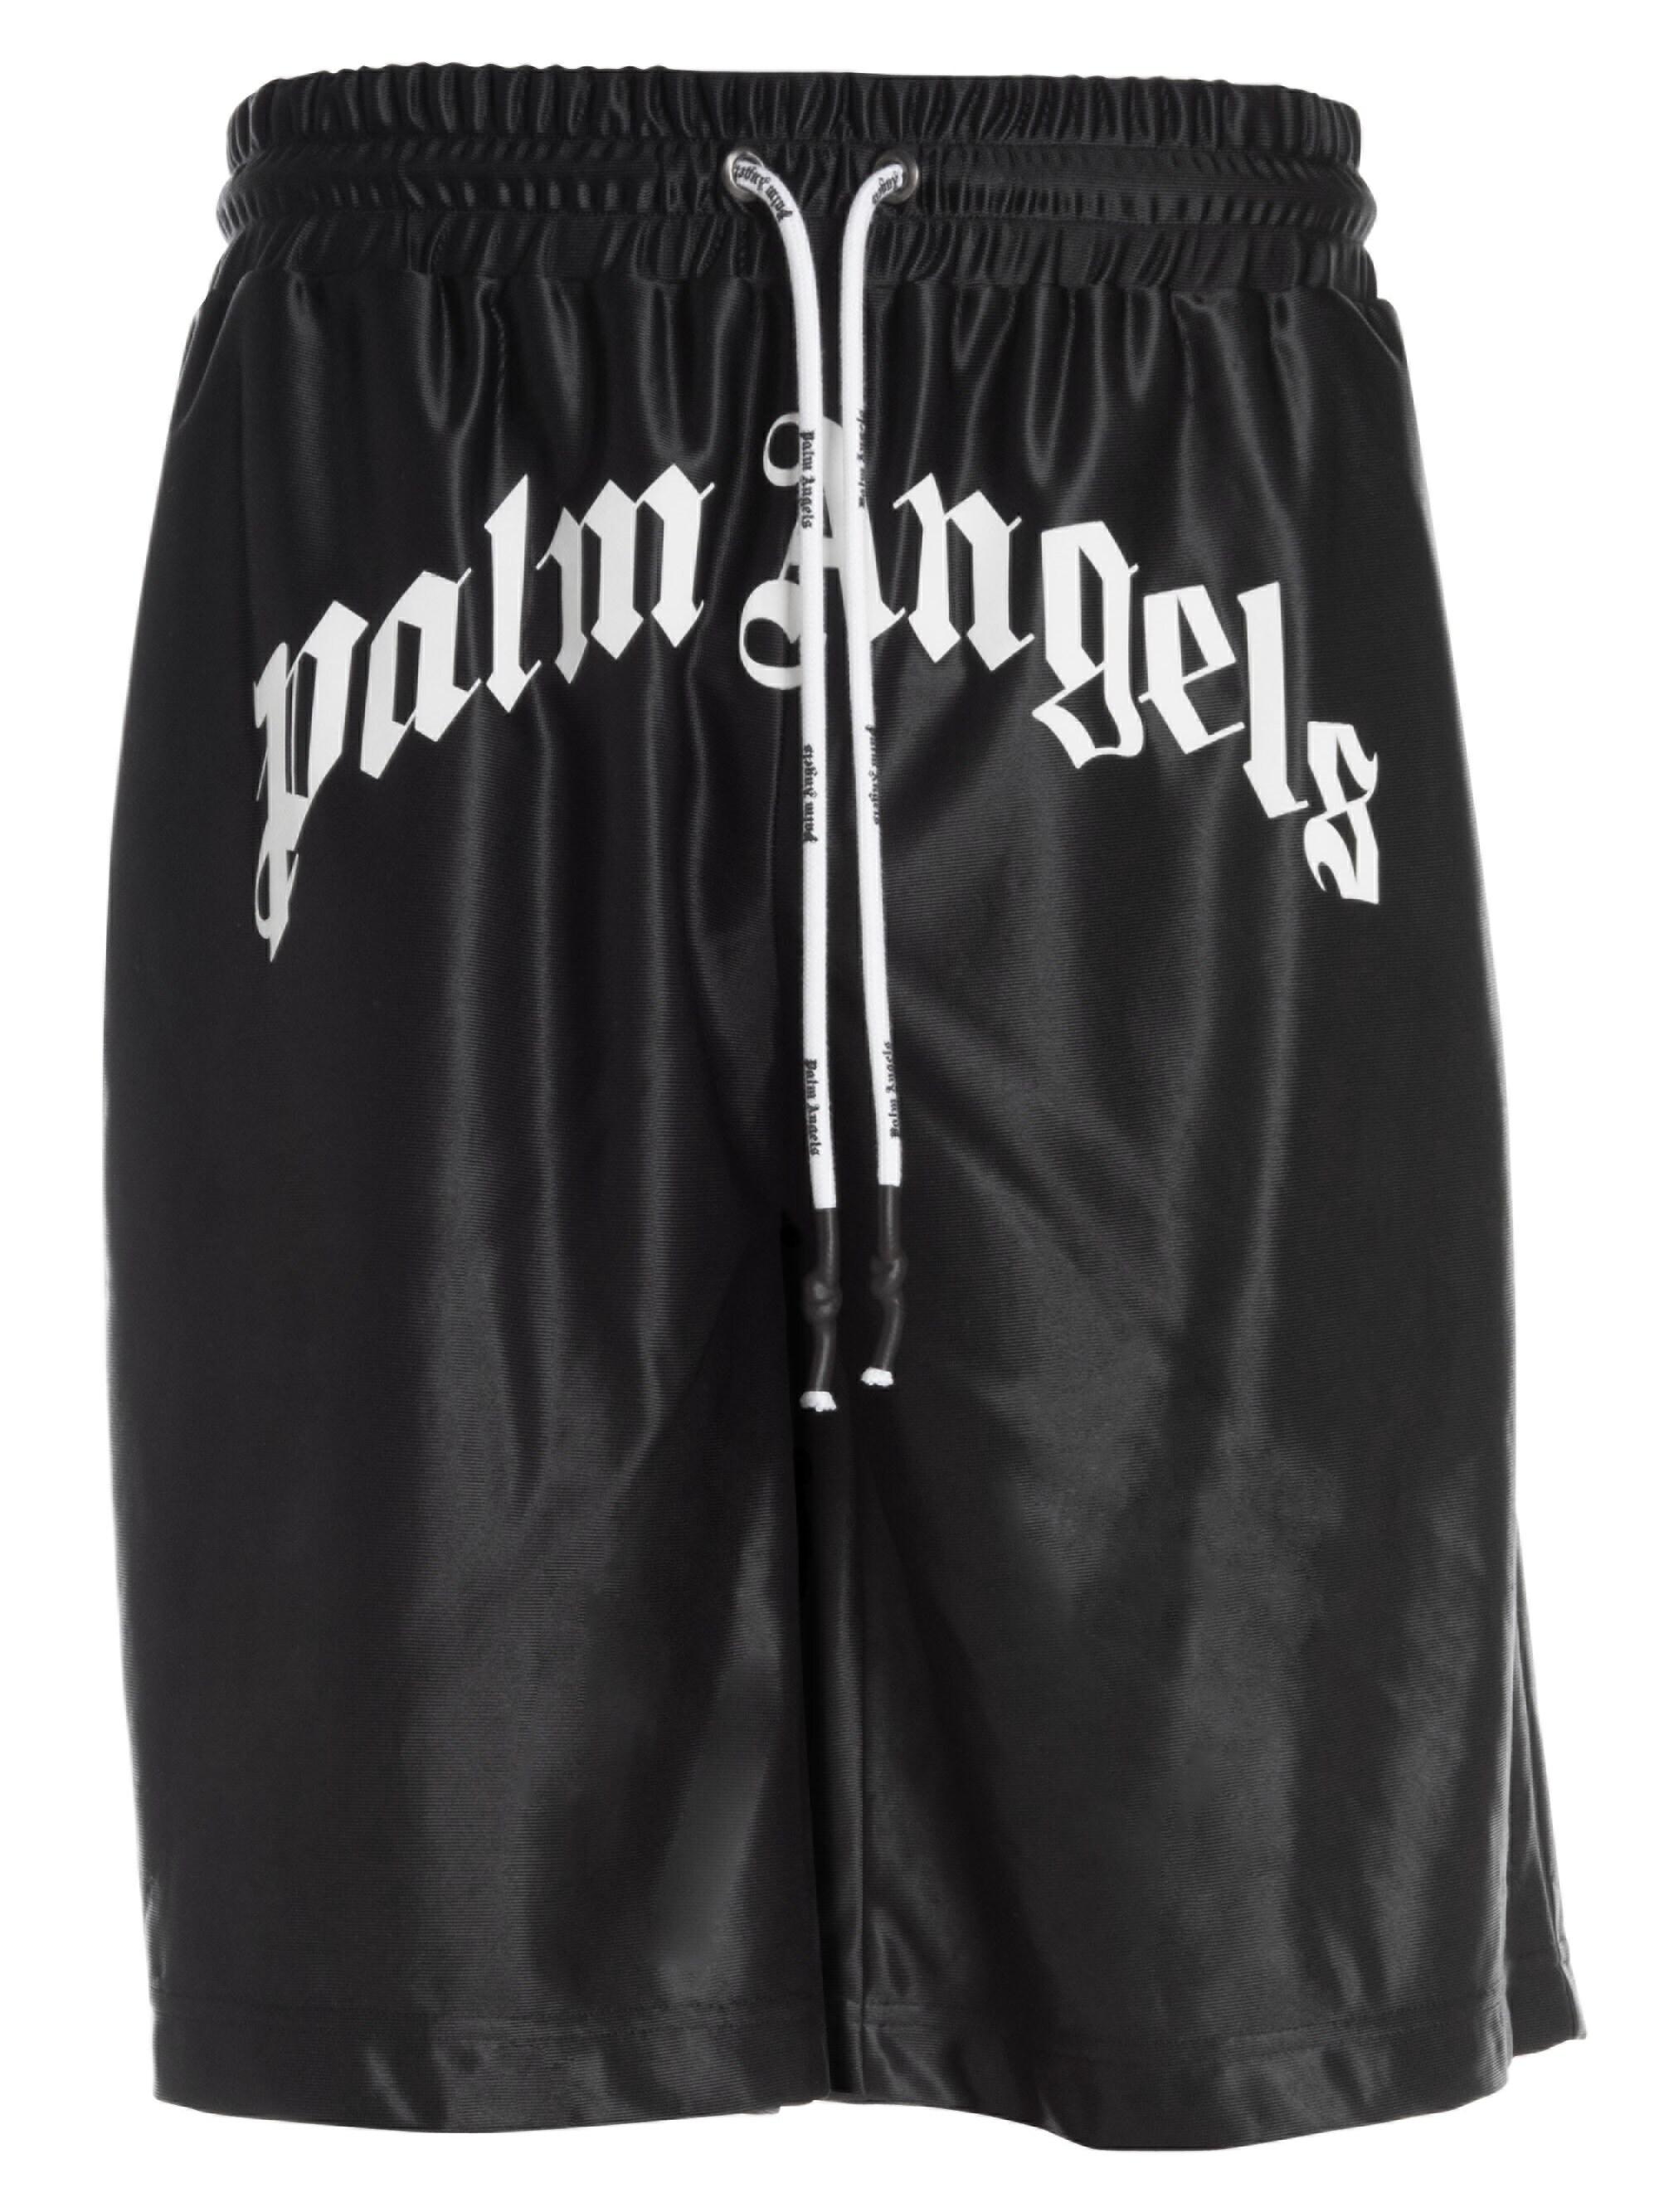 Palm Angels Logo Mesh Shorts in Black for Men - Lyst